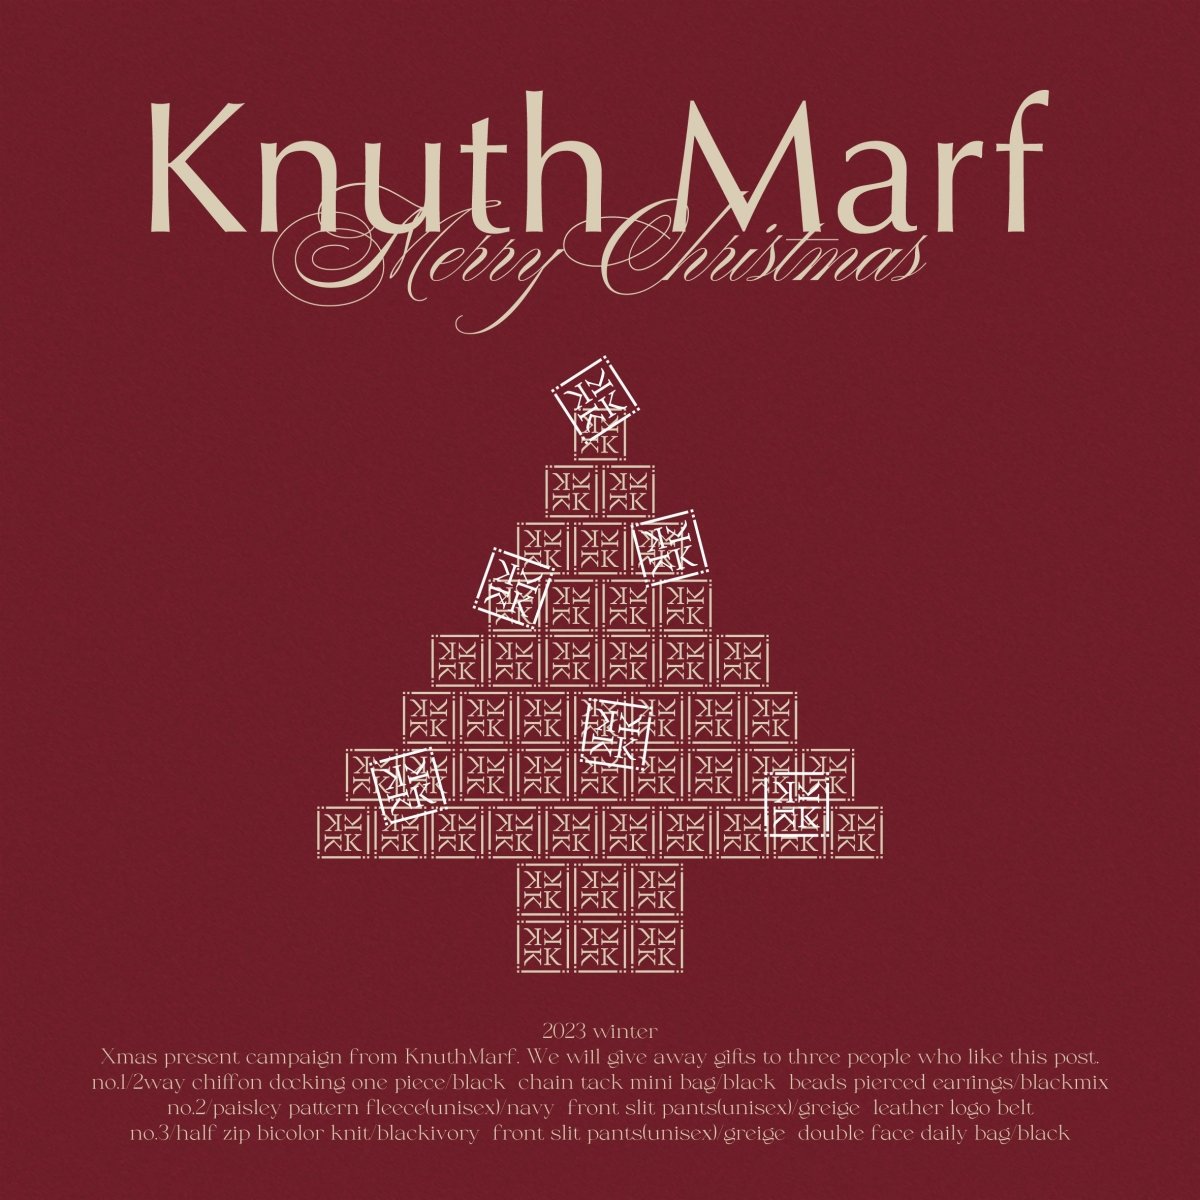 Christmas present campaign - KNUTH MARF